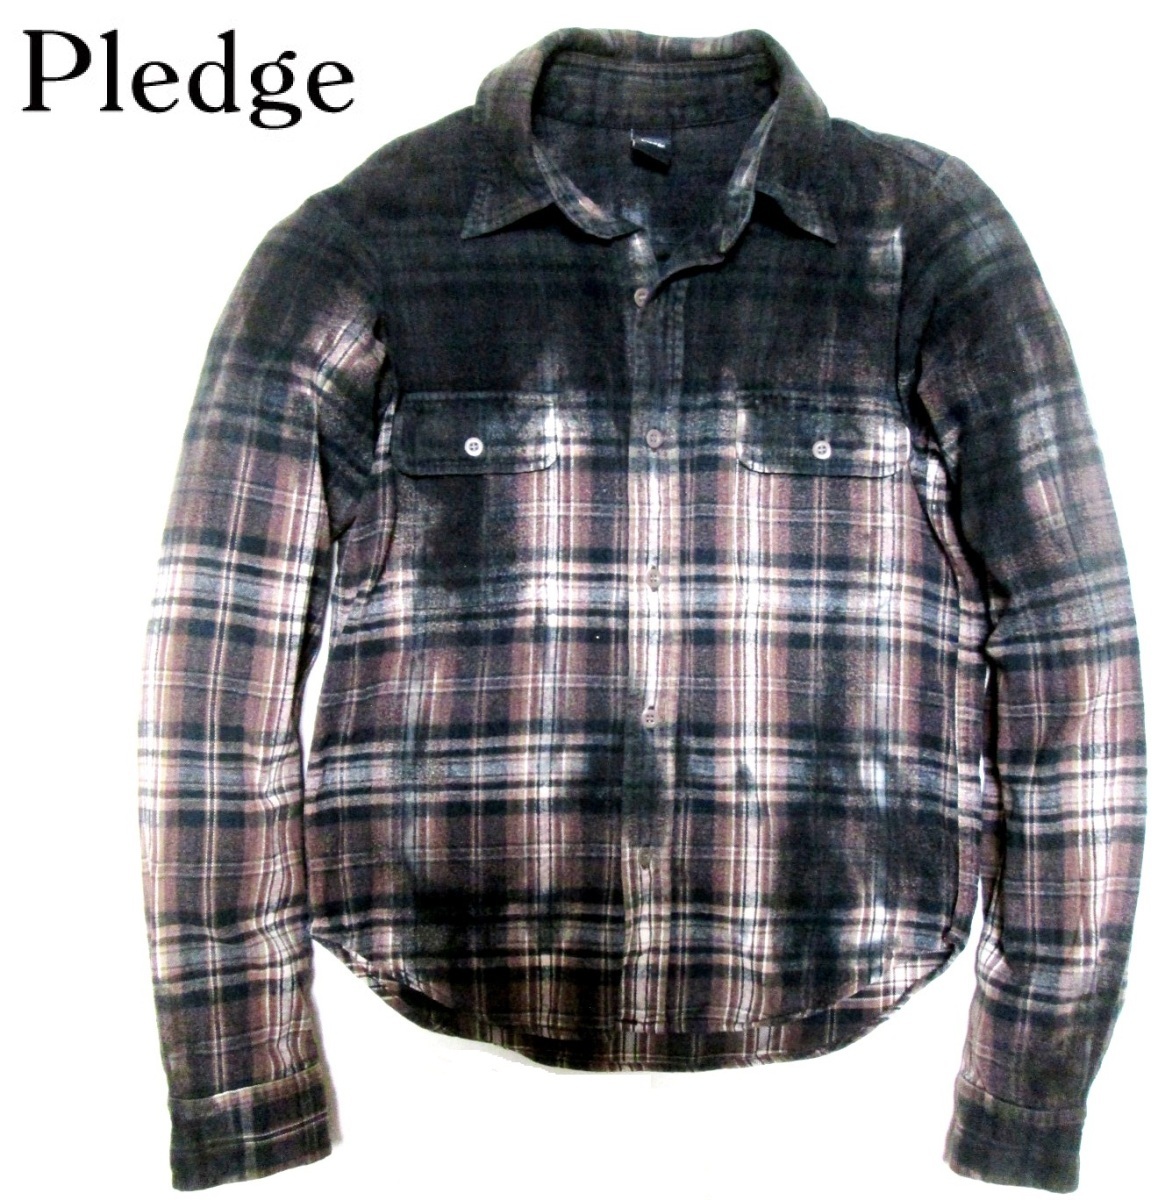  немедленно полная распродажа 07 season pledge Pledge градация обработка фланель рубашка 